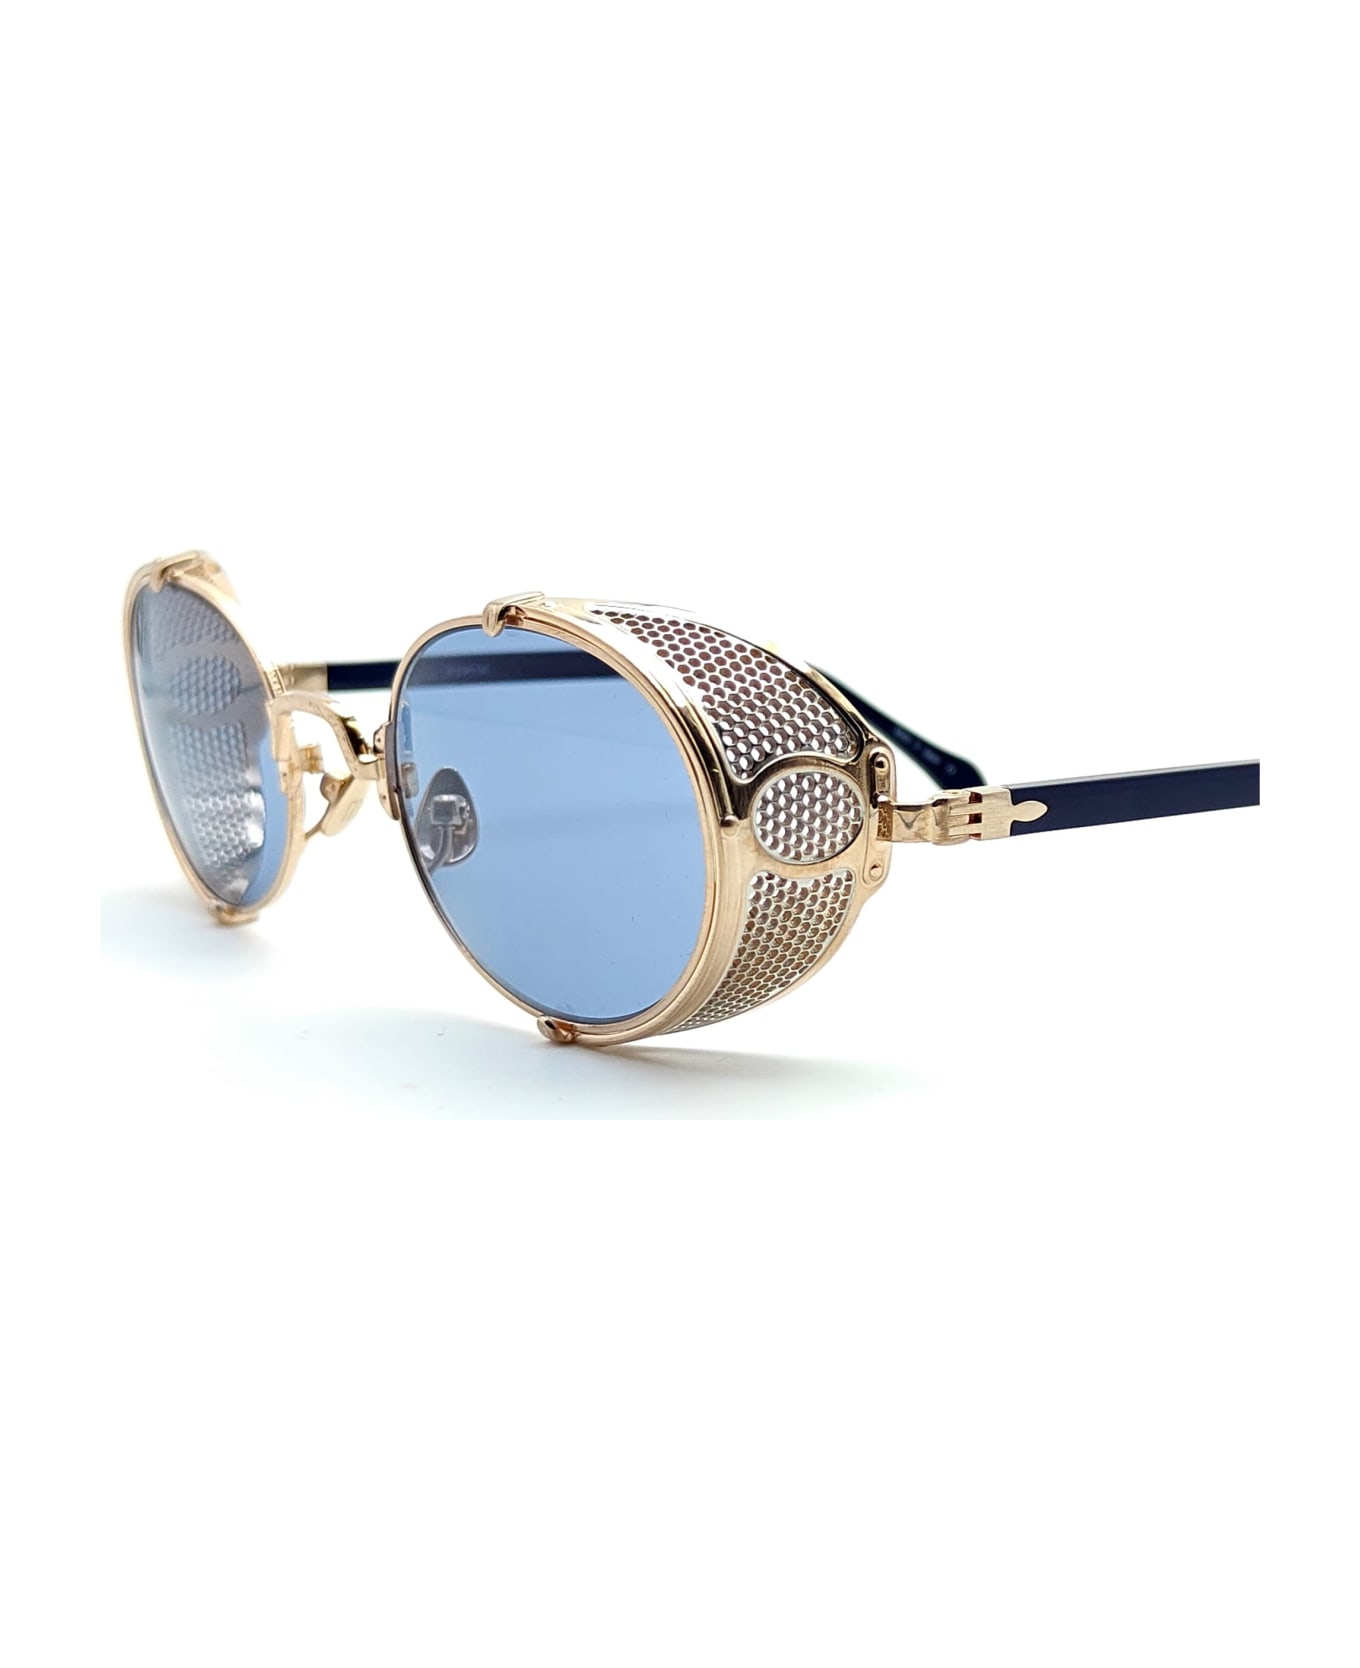 Matsuda 10610h - Brushed Gold / Black Sunglasses - Gold サングラス